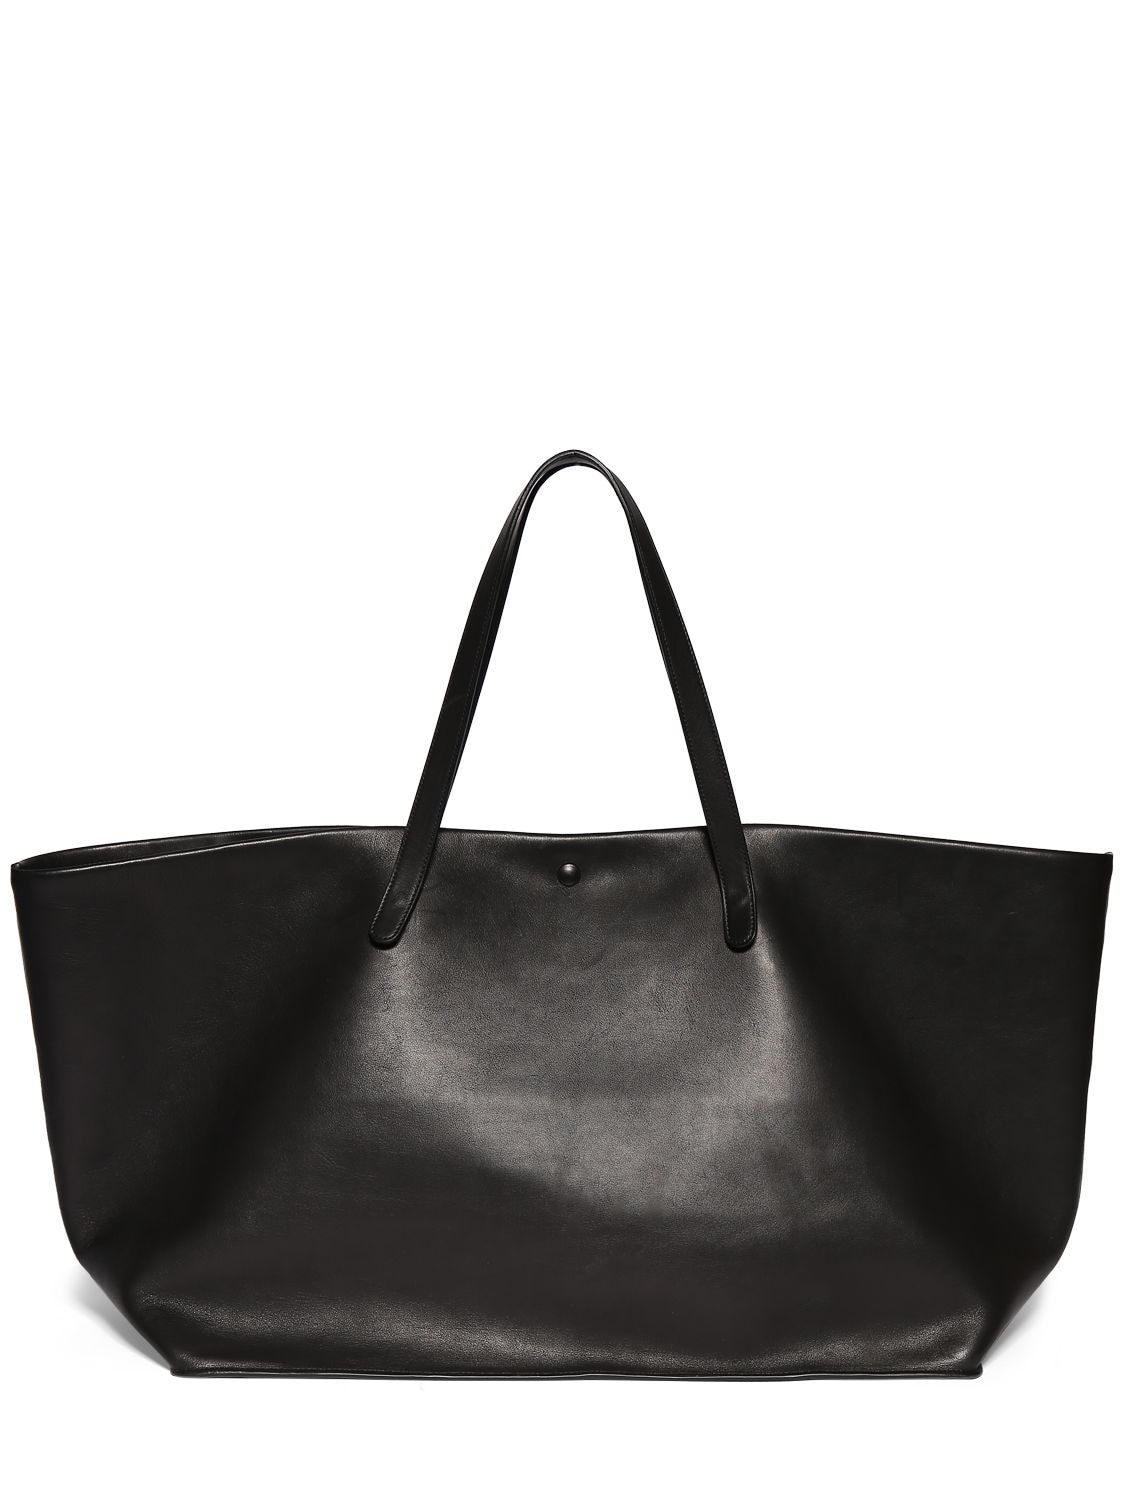 Image of Xl Idaho Leather Tote Bag